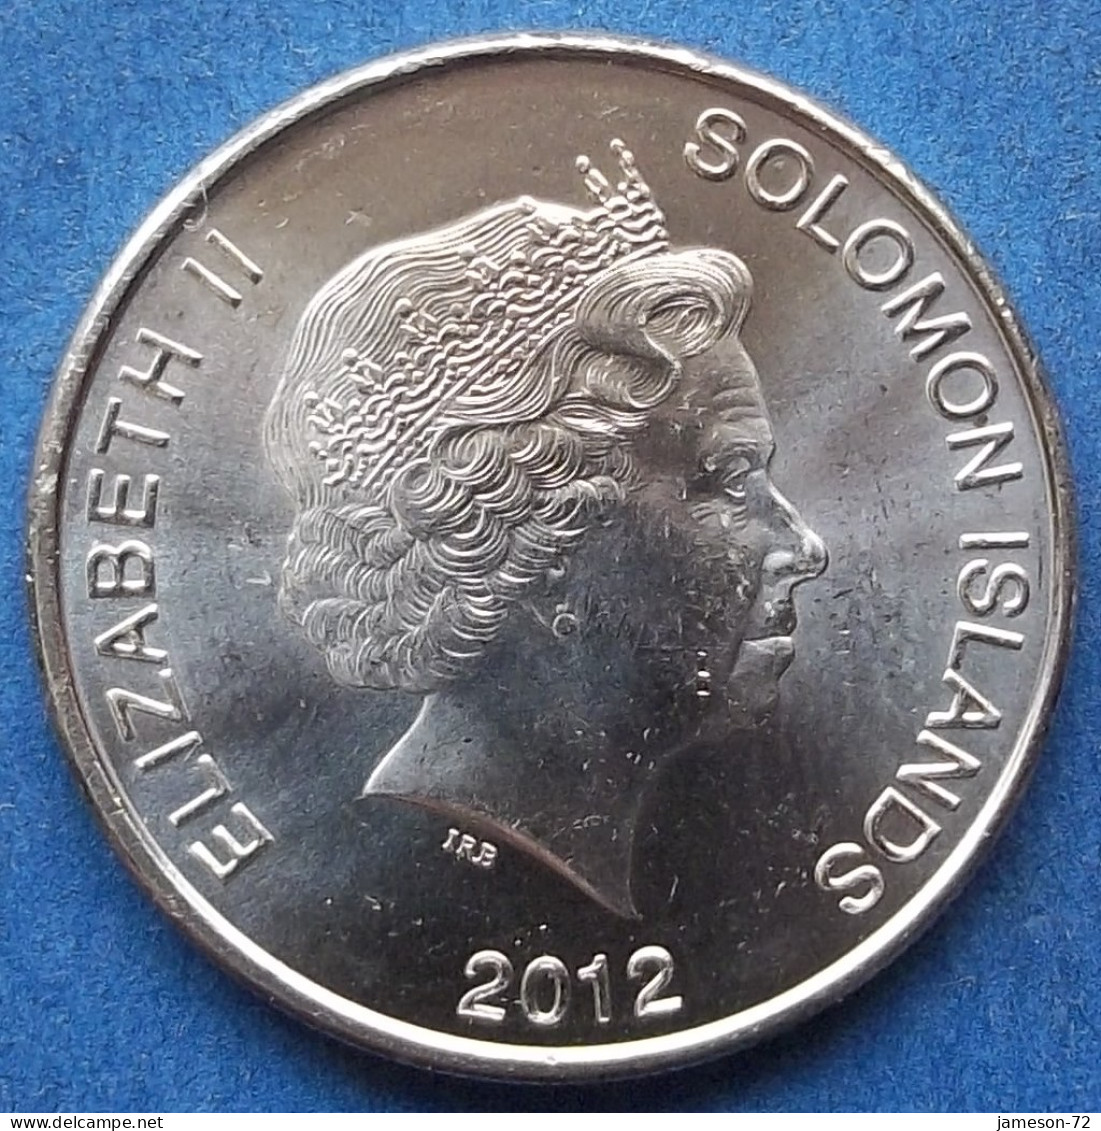 SOLOMON ISLANDS - 50 Censt 2012 "Eagle Spirit" KM# 237 Commonwealth Nation, Elizabeth II - Edelweiss Coins - Solomoneilanden